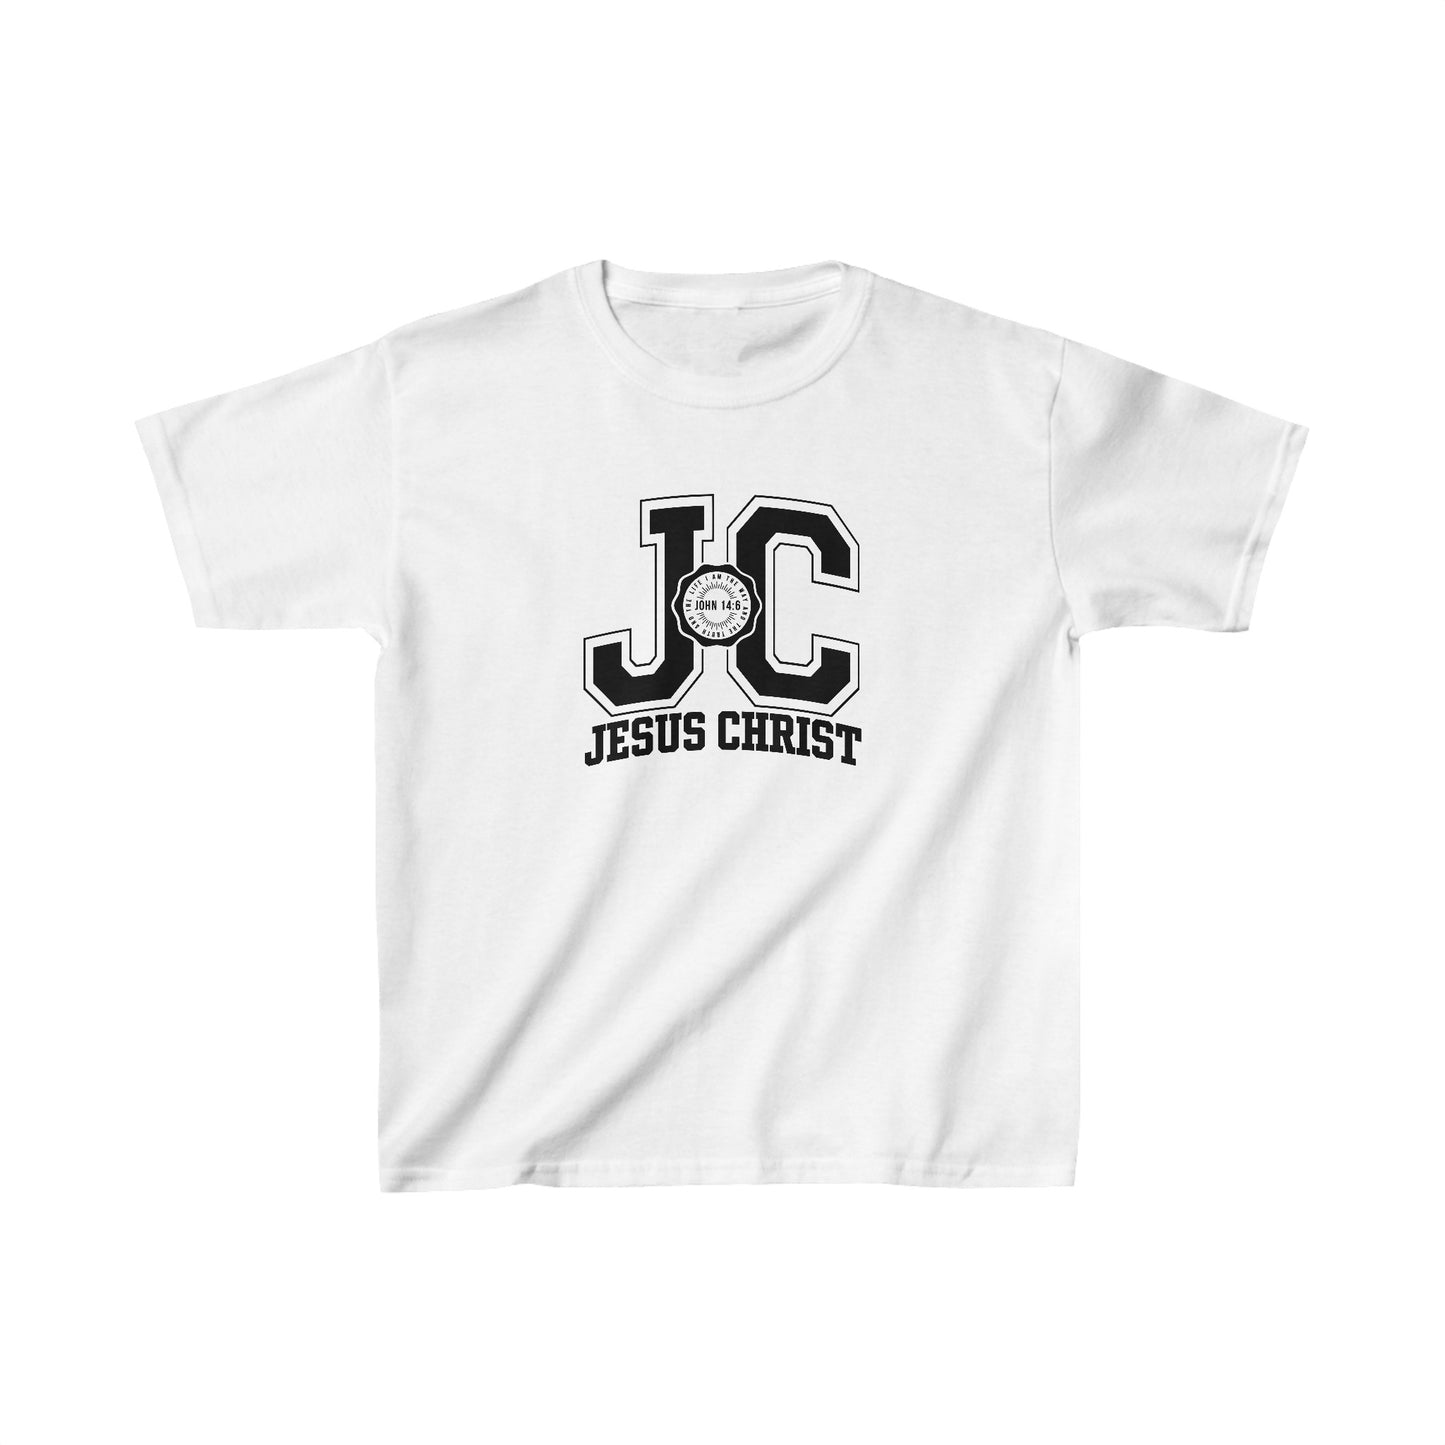 JC Jesus Christ Youth Christian T-Shirt